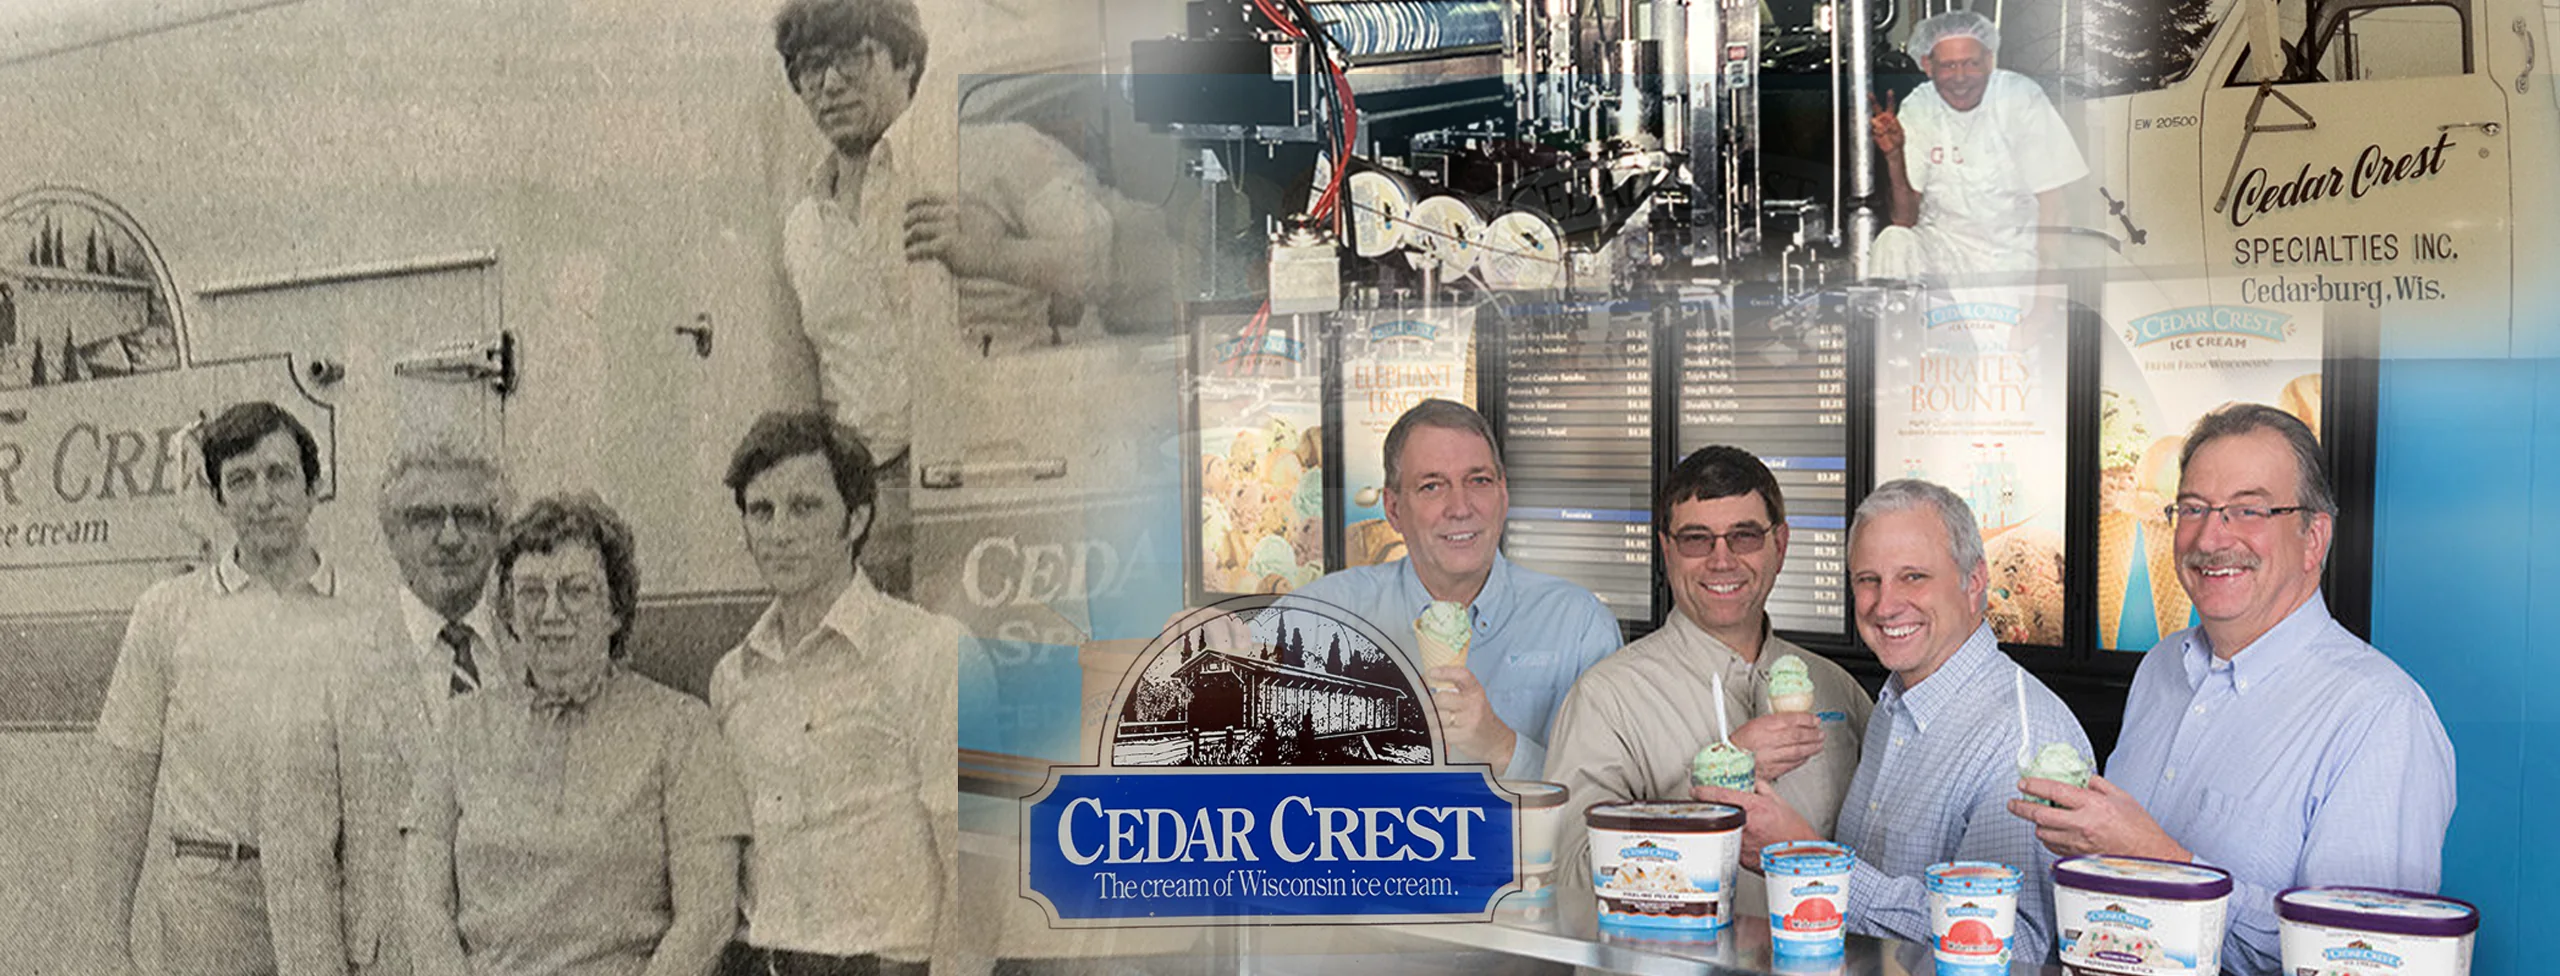 Cedar Crest Ice Cream Historical Photo Collage